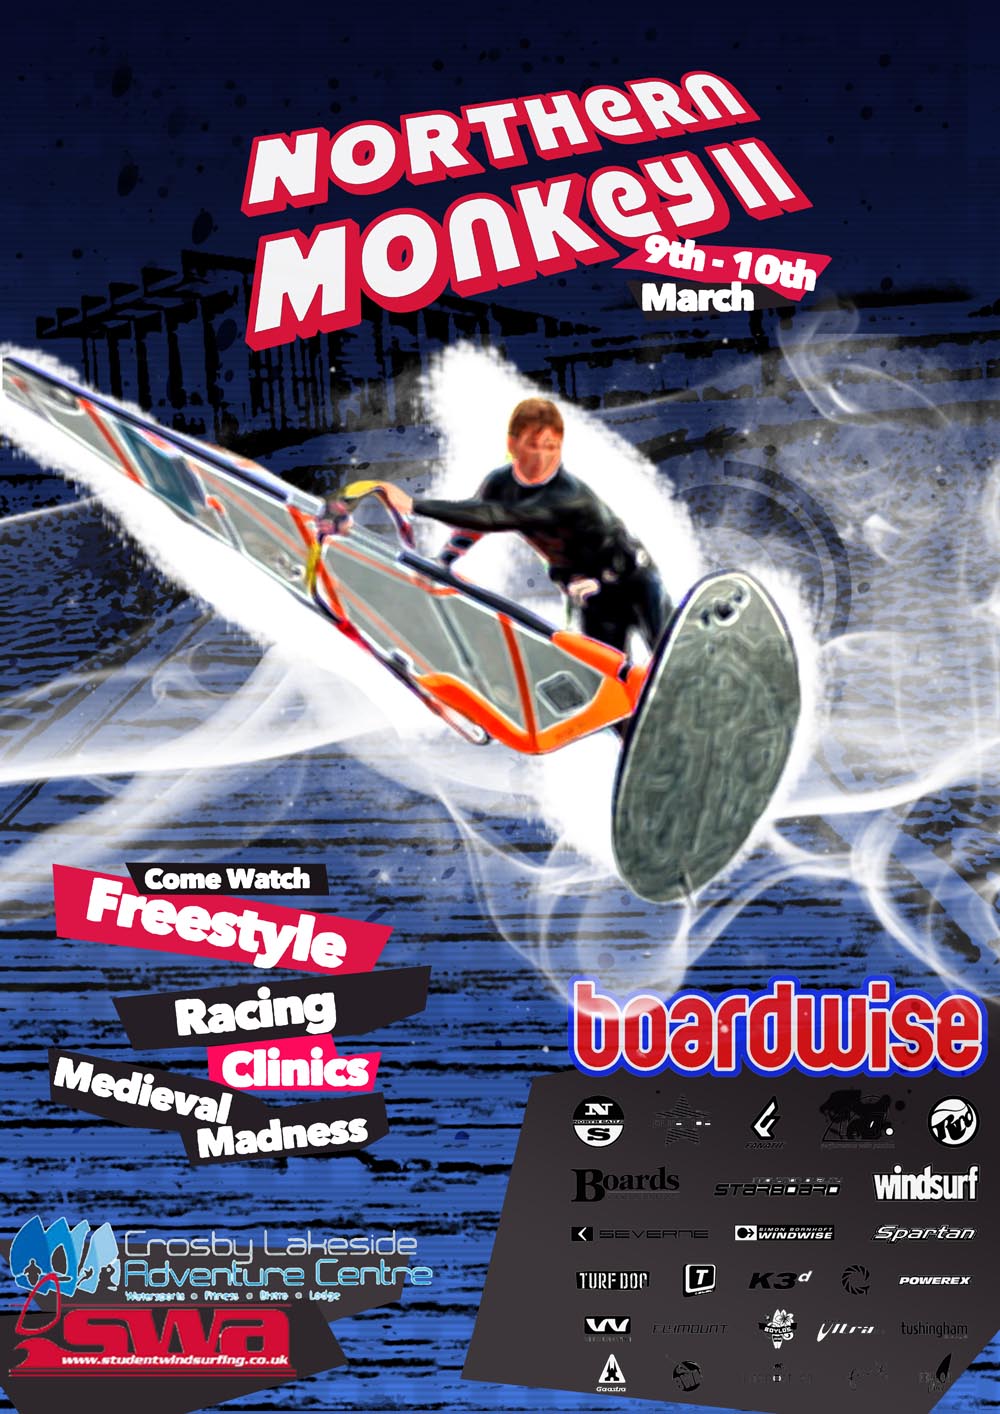 northern monkey website size poster 2012